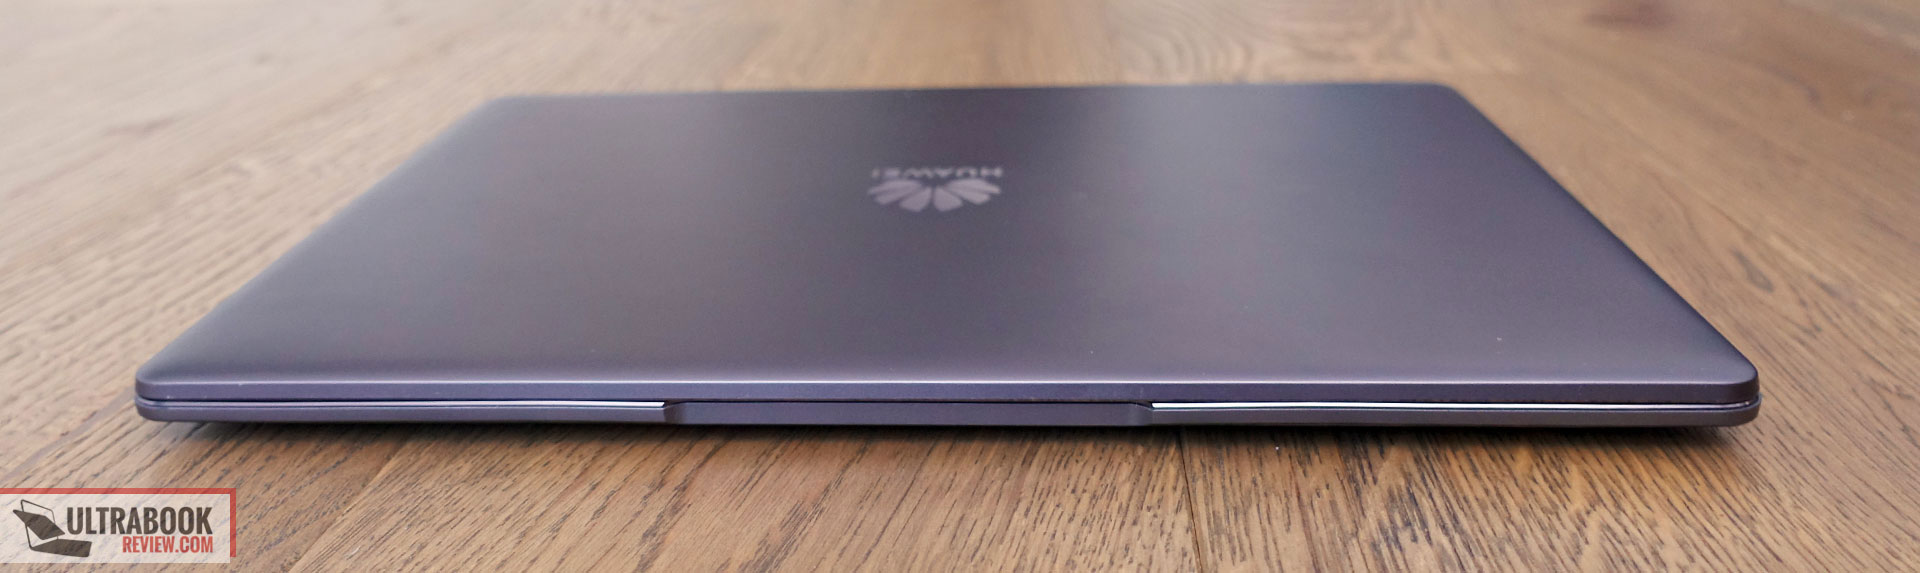 Huawei MateBook 13 review (Core i7, Nvidia GPU, 3:2 13-inch display)